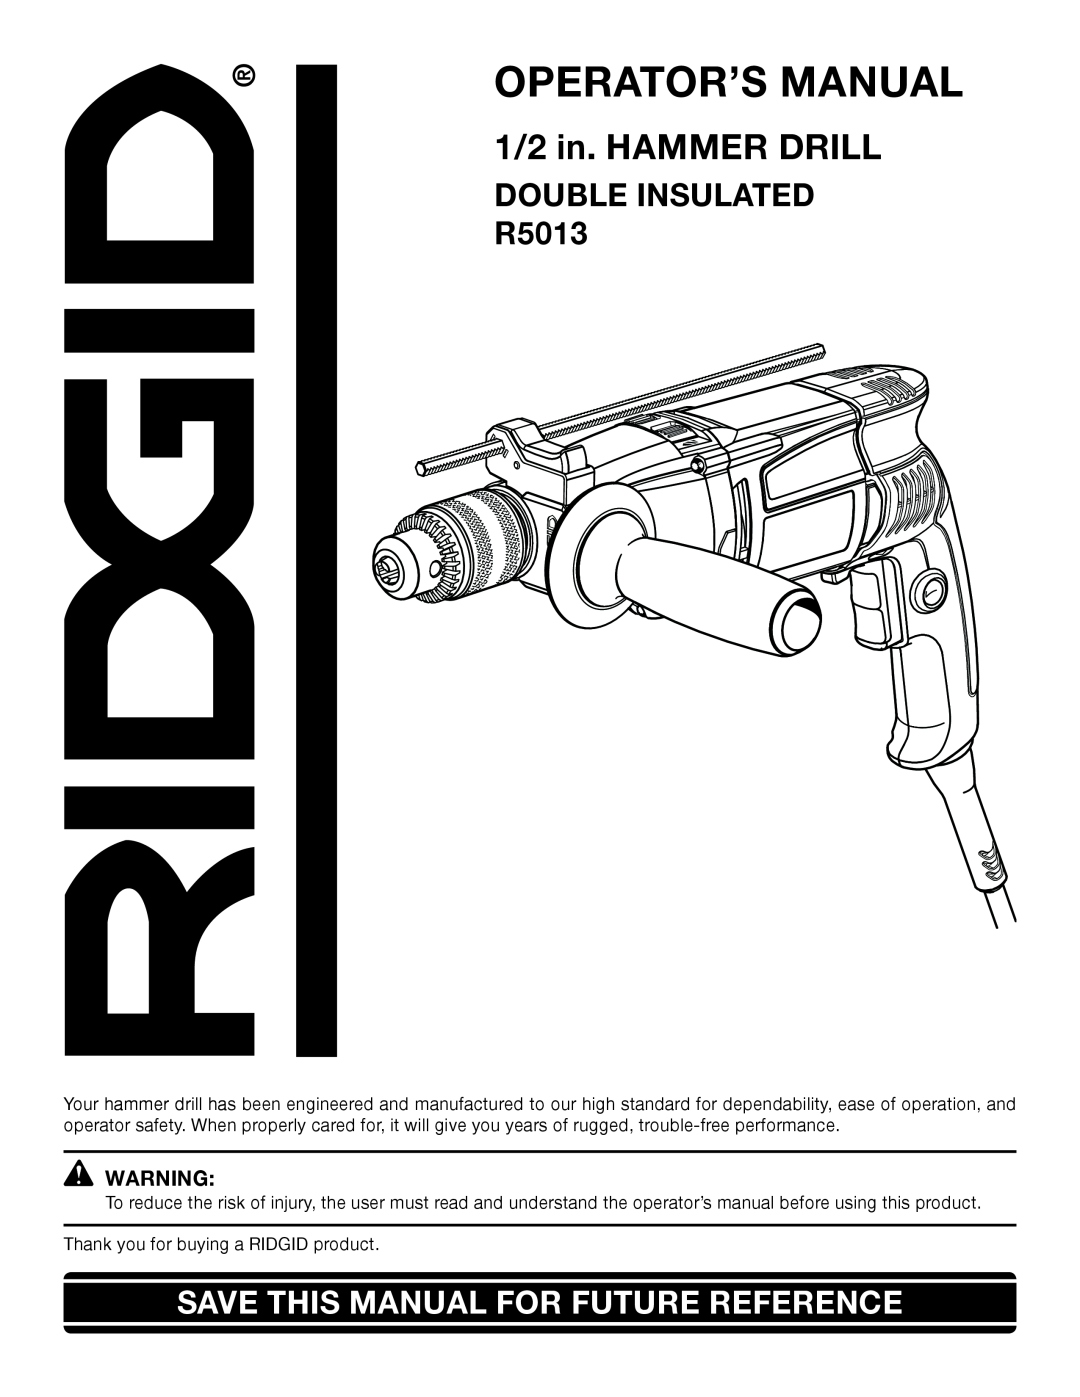 RIDGID manual RIDGID R5013 1/2 in. HAMMER DRILL REPAIR SHEET, RIDGID PERCEUSE À PERCUSSION DE 13 mm 